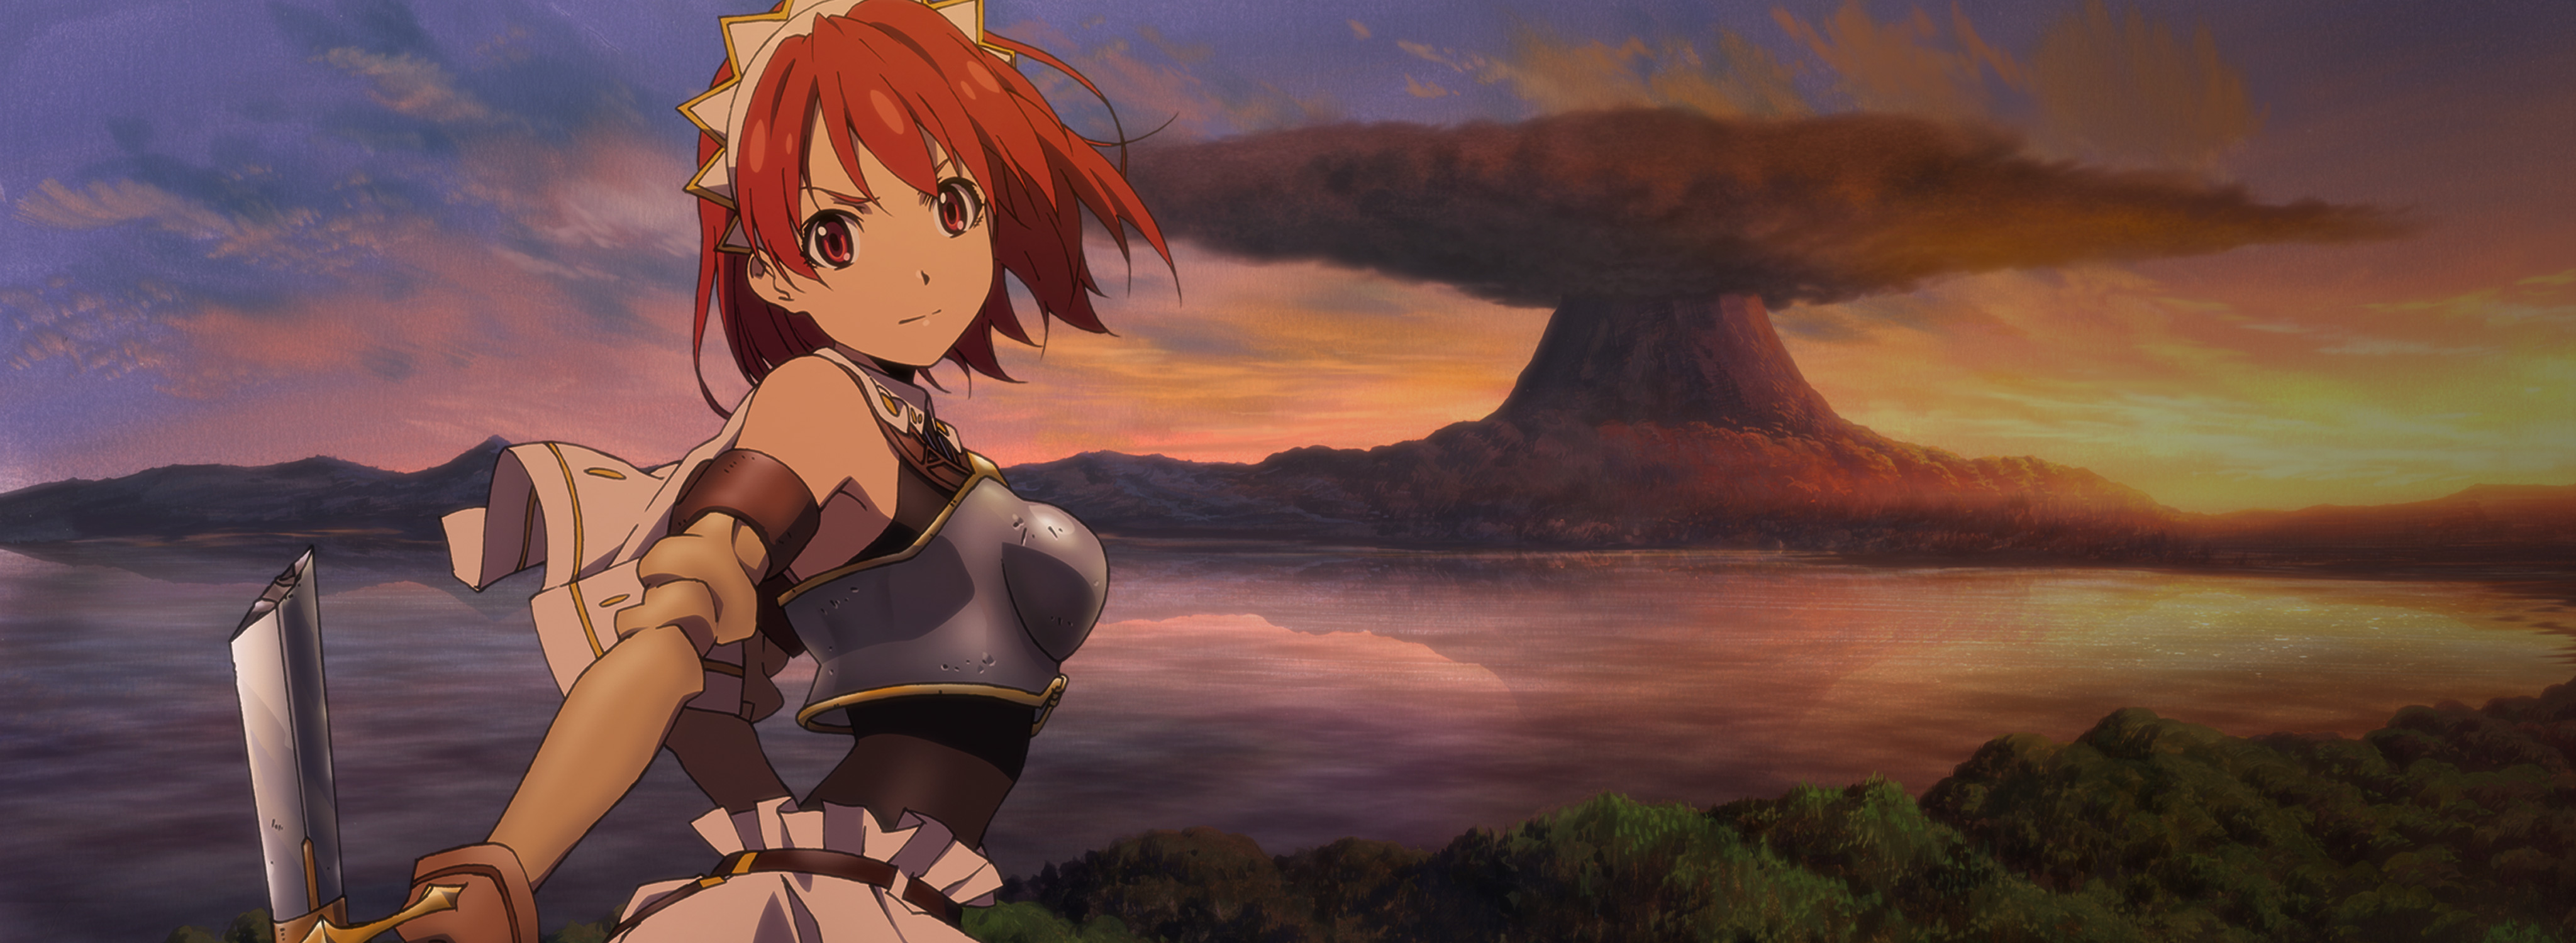 Anime The Sacred Blacksmith HD Wallpaper | Background Image